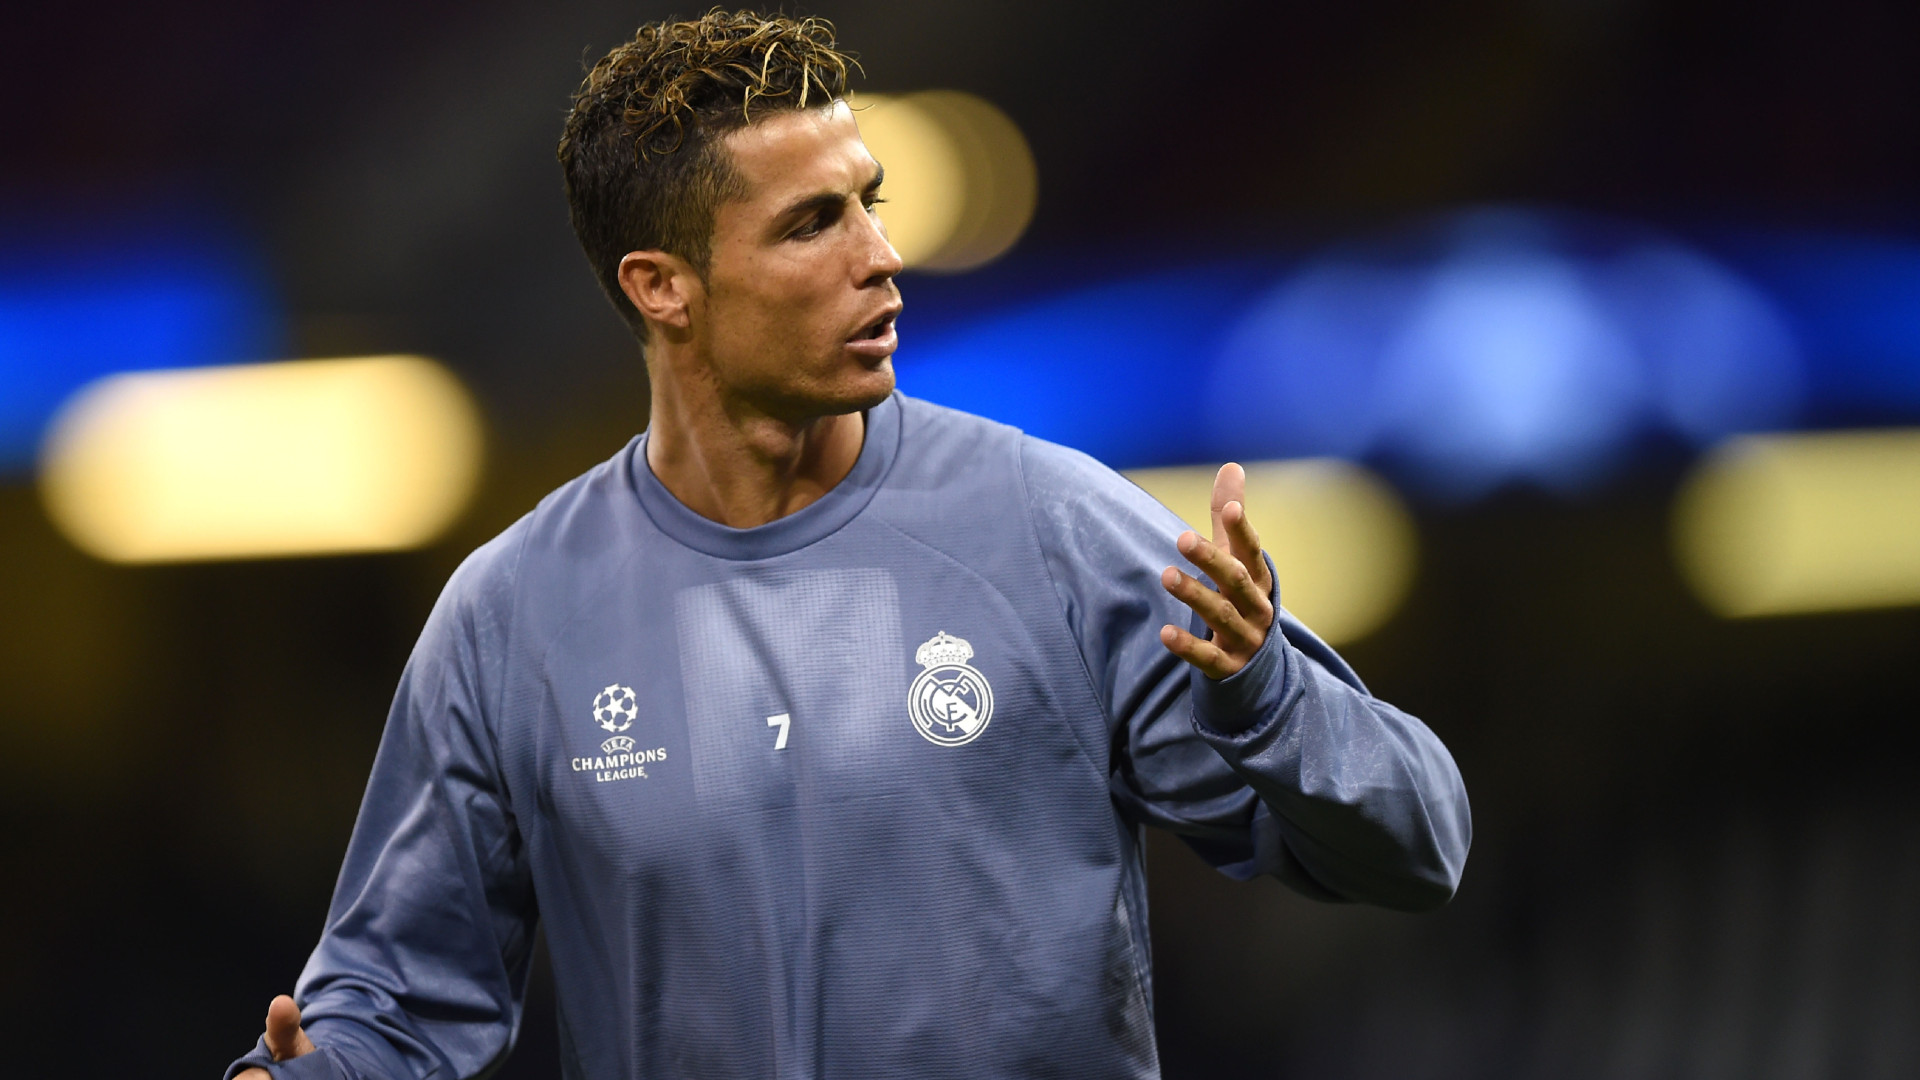 Cristiano Ronaldo de retour au Real ? La folle rumeur